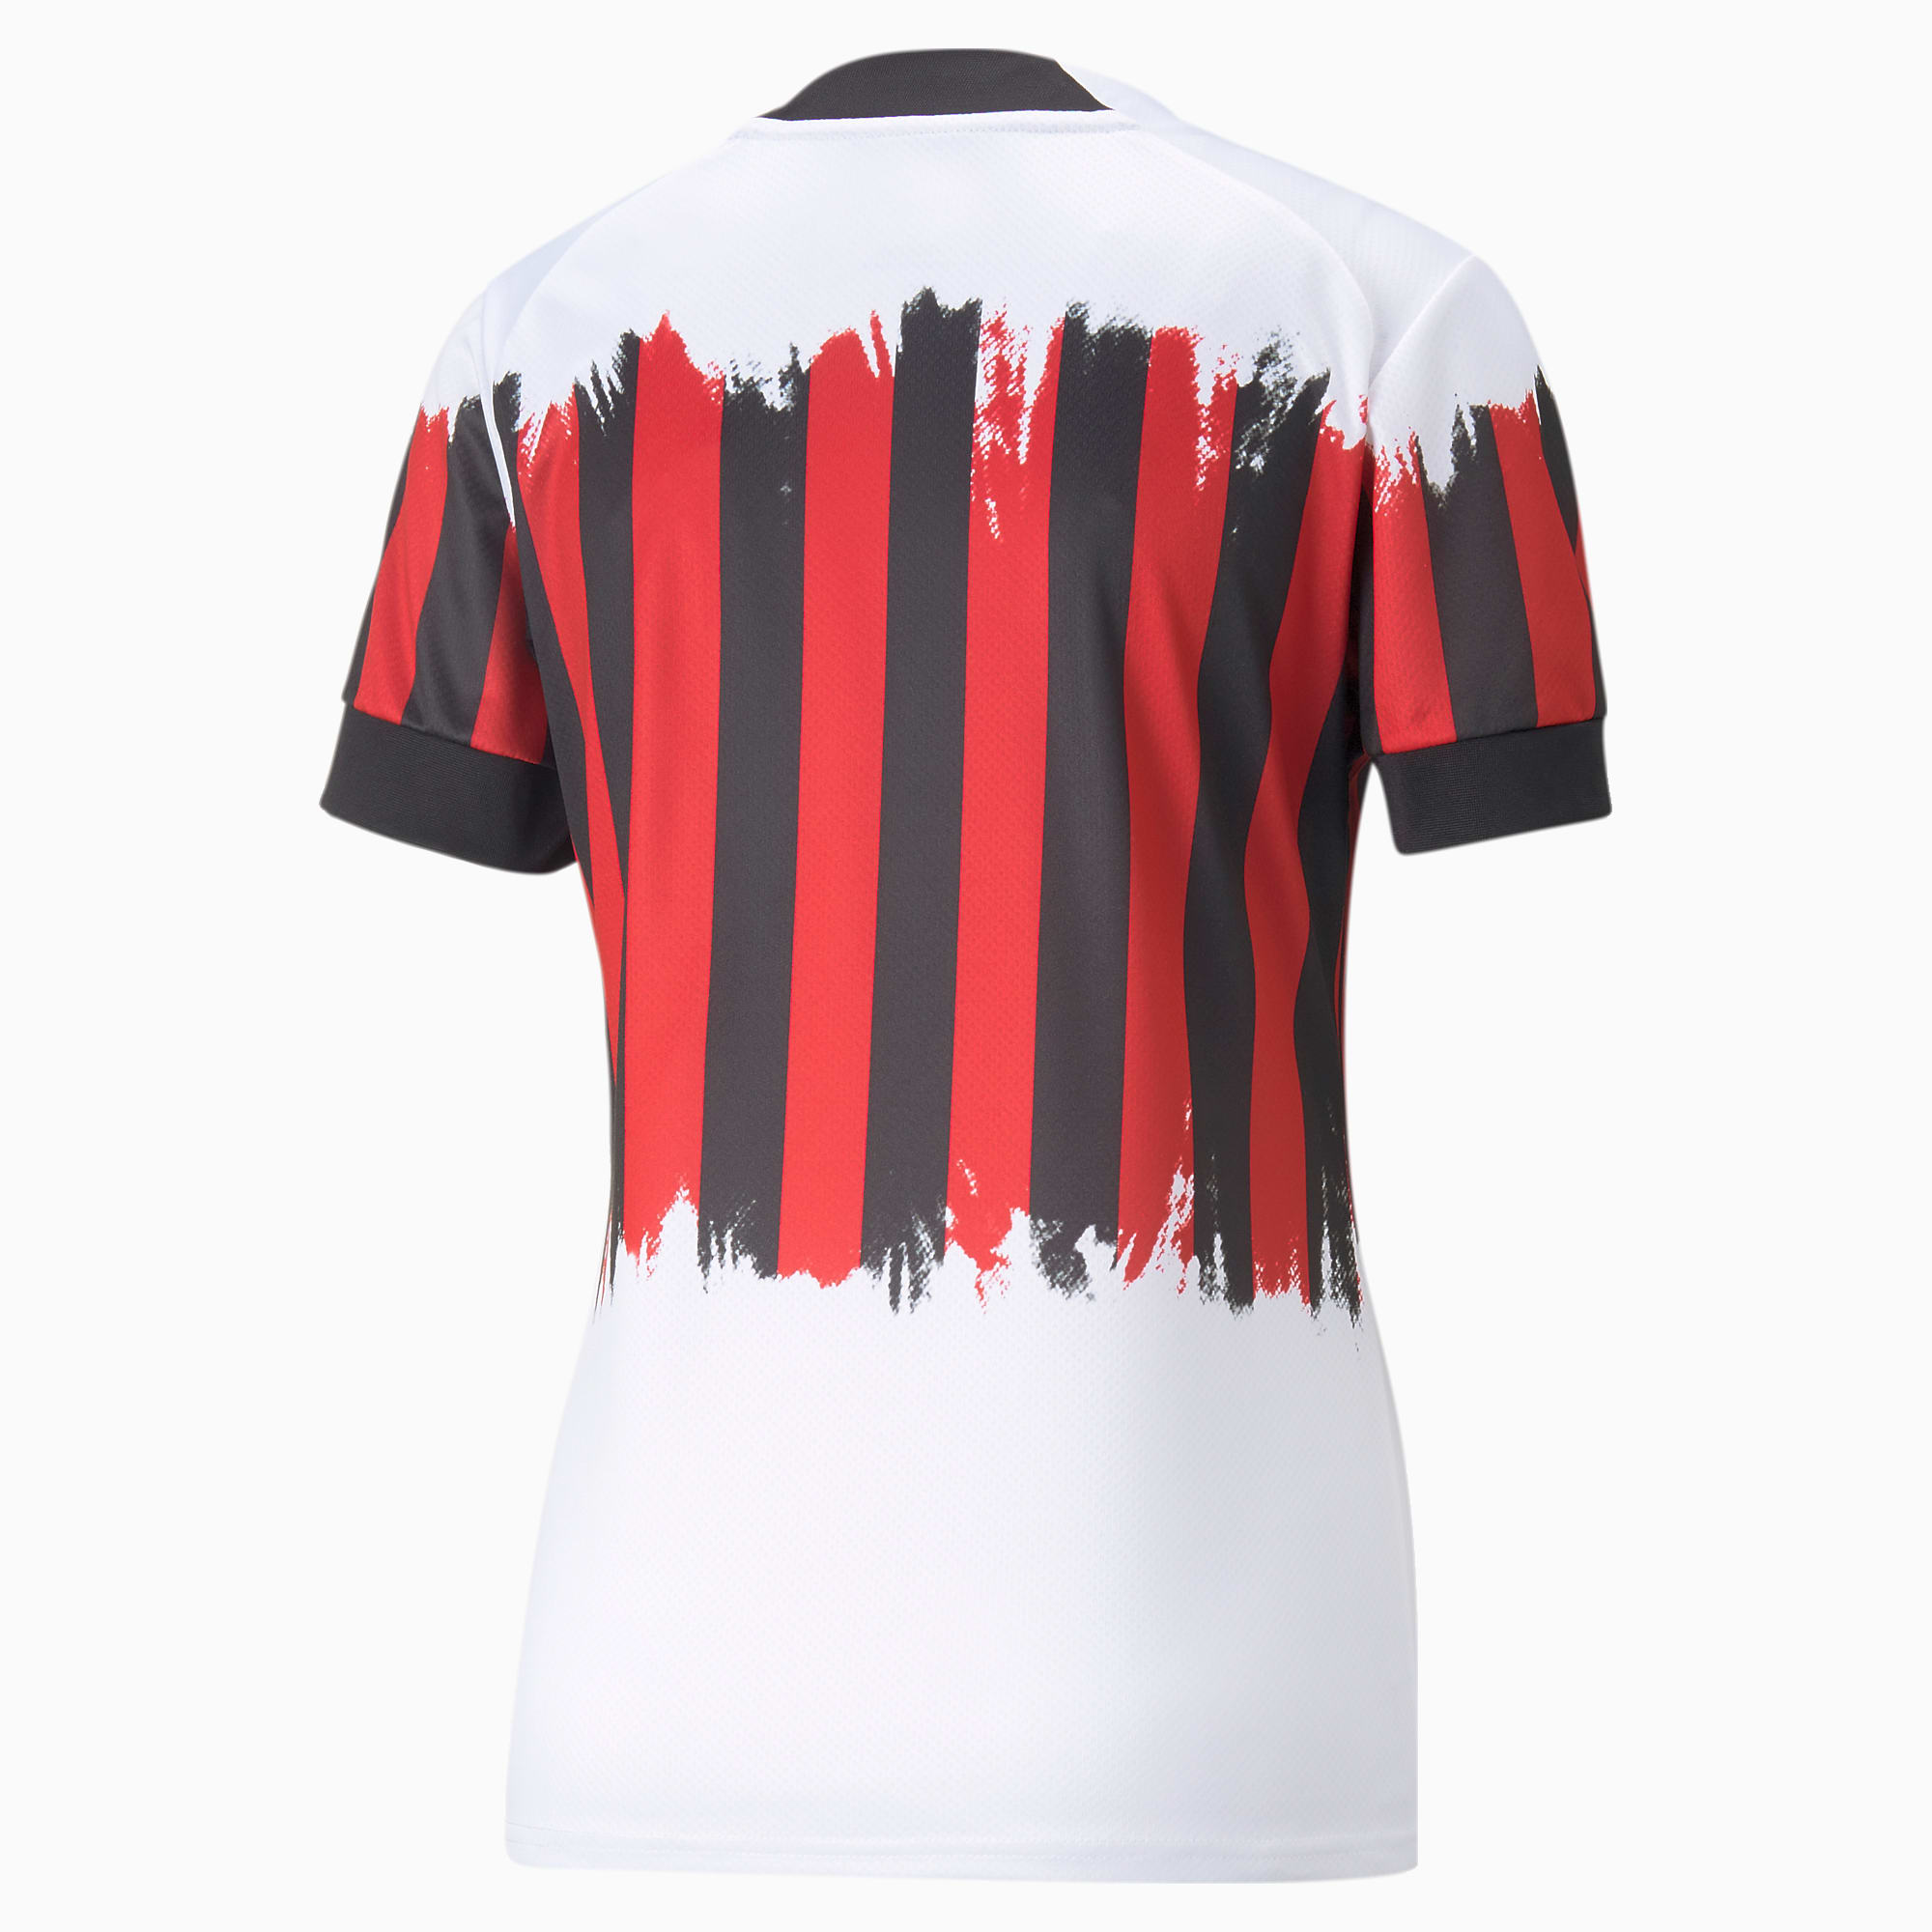 A.C. Milan x NEMEN Replica Women's Soccer Jersey